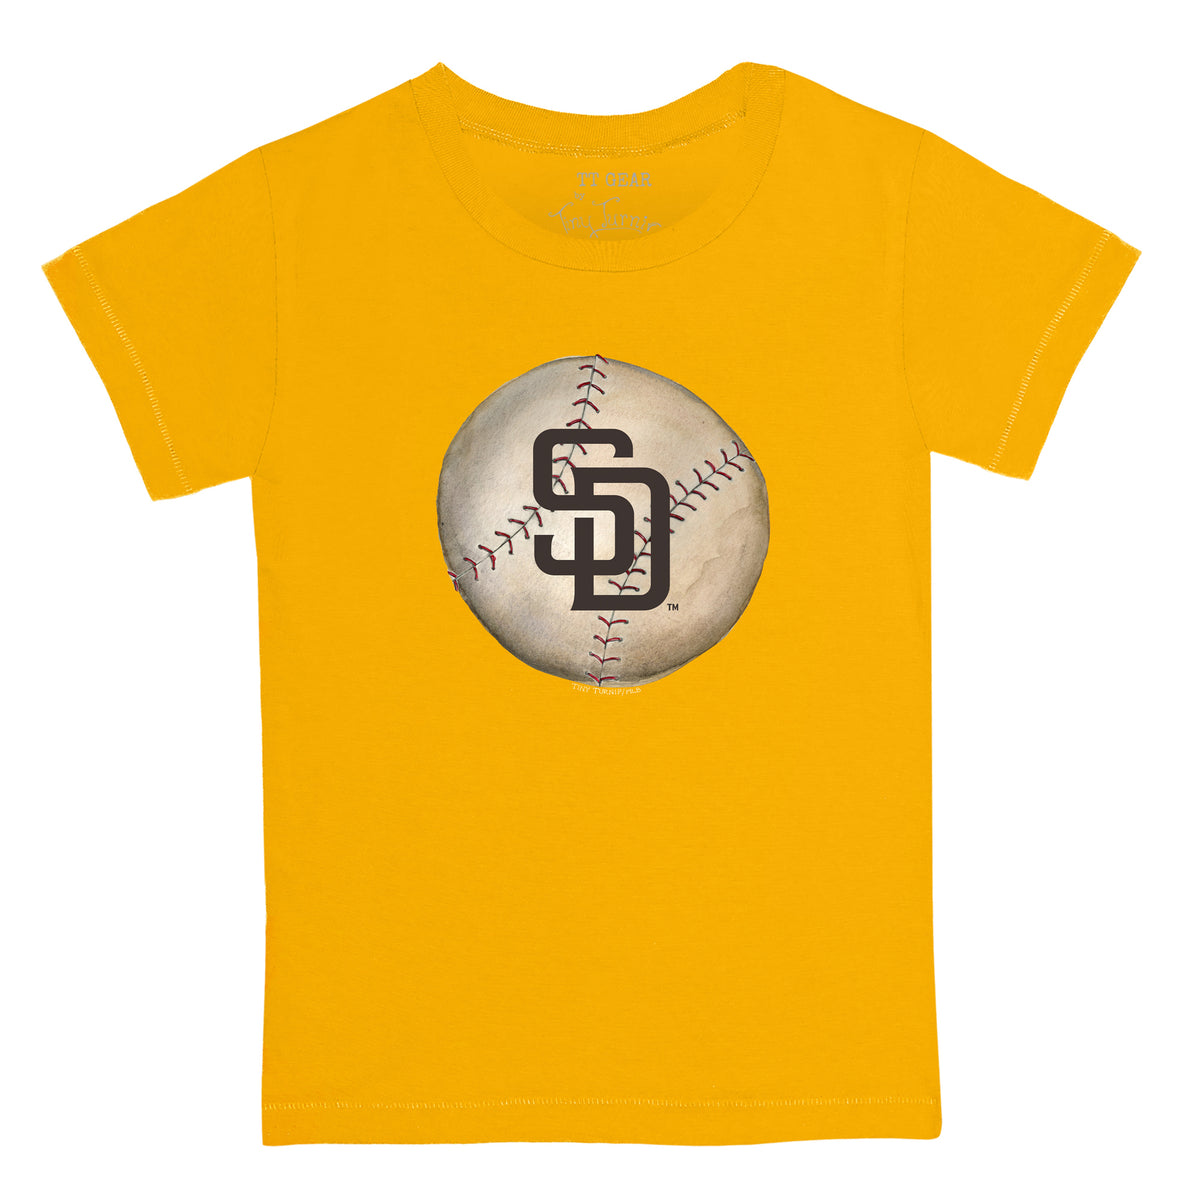 San Diego Padres Stitched Baseball Tee Shirt